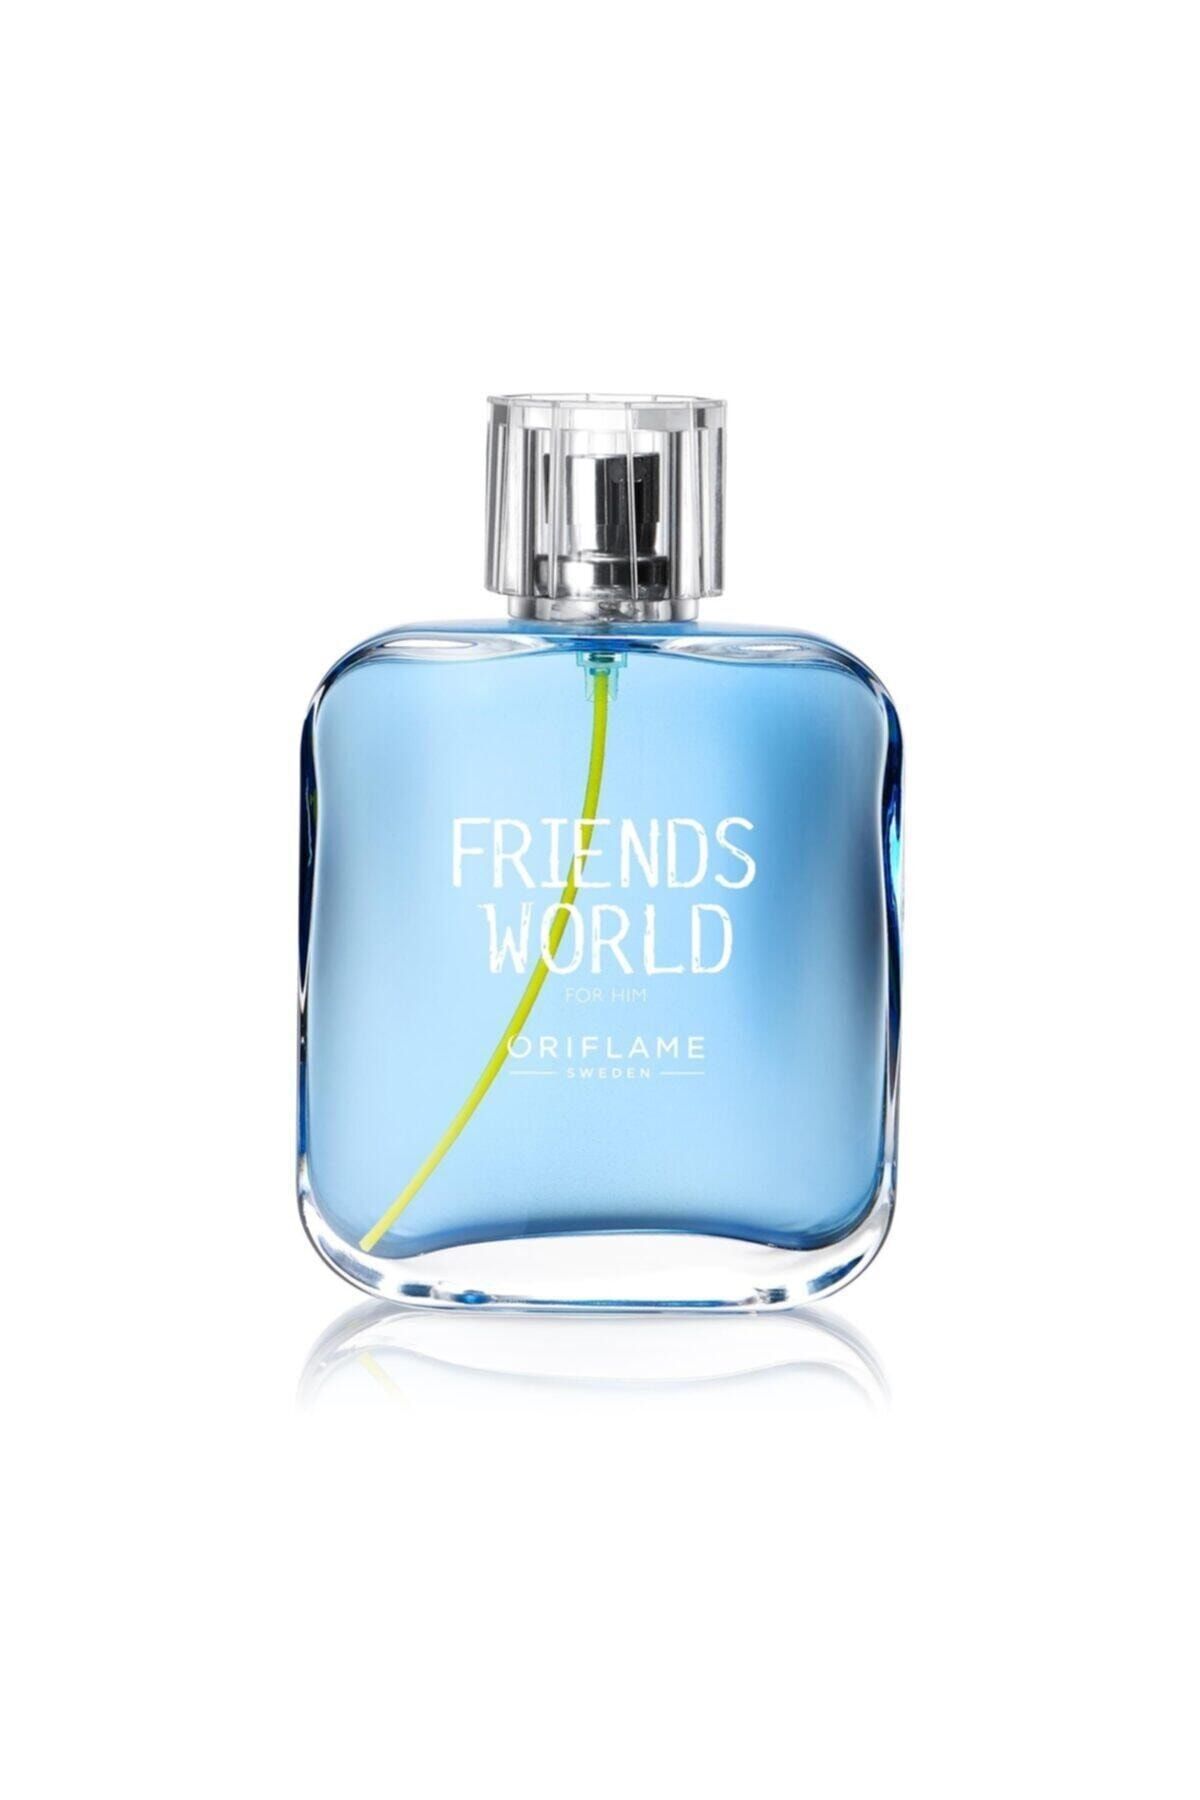 Oriflame Friends World  Edt 75 ml Erkek Parfüm ELİTKOZMETİK45009